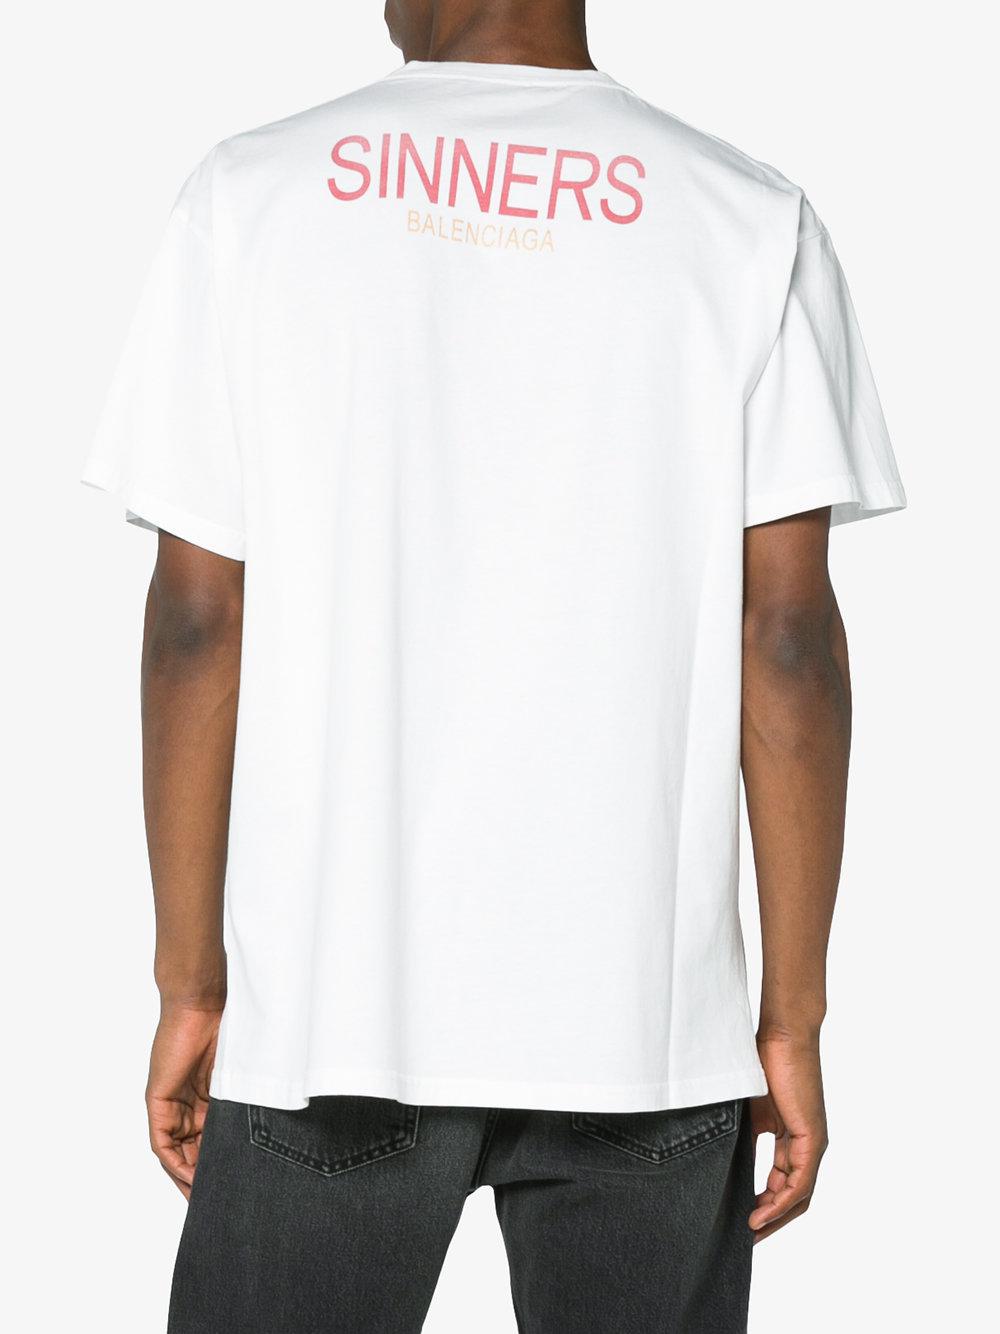 balenciaga t shirt sinners